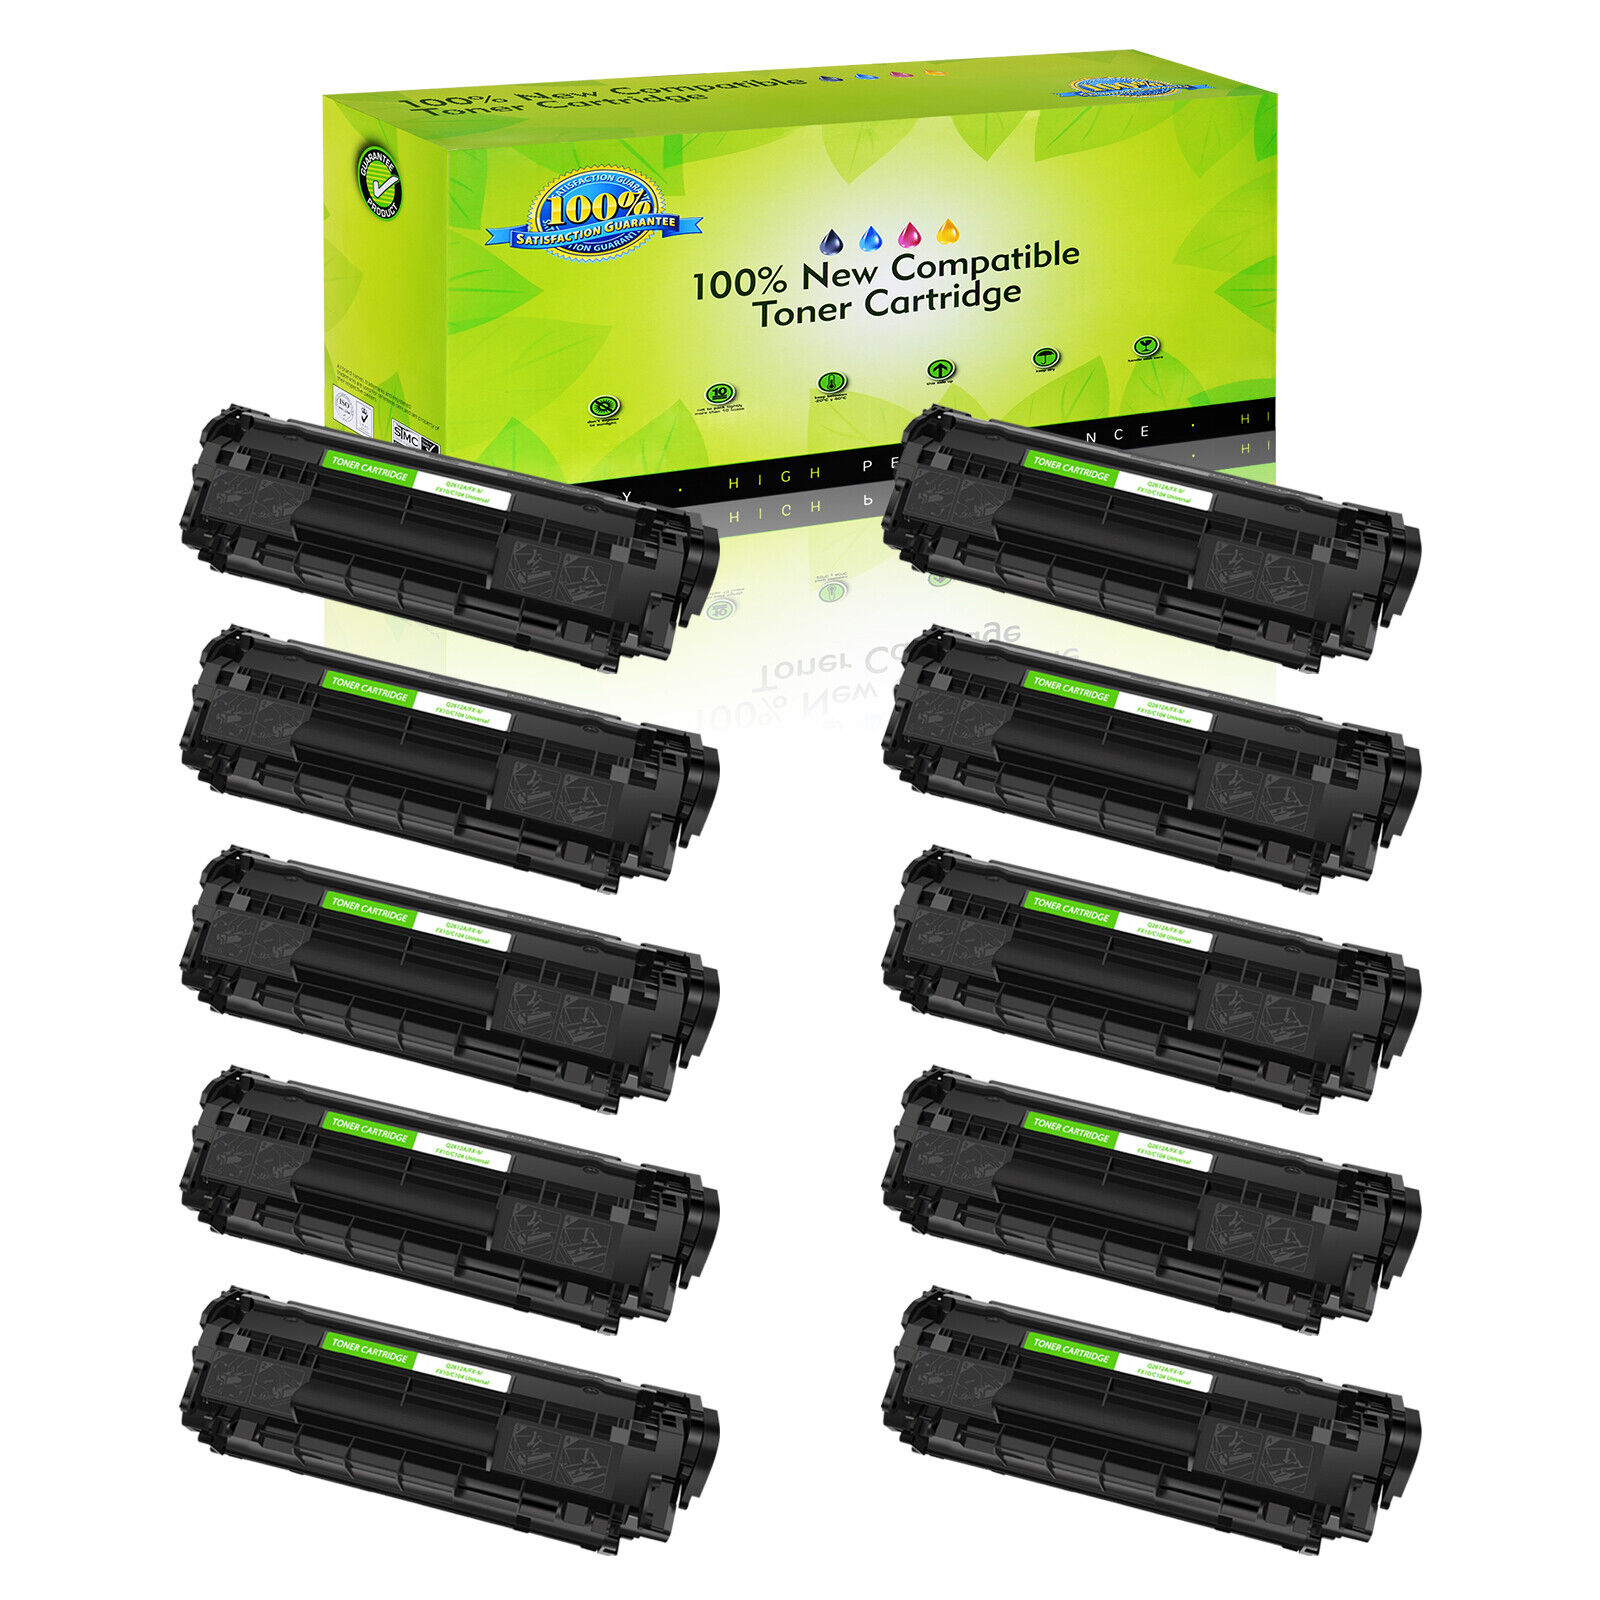 10PK Q2612A 12A Toner Cartridge Compatible for HP LaserJet 1018 3015 3055 M1319f